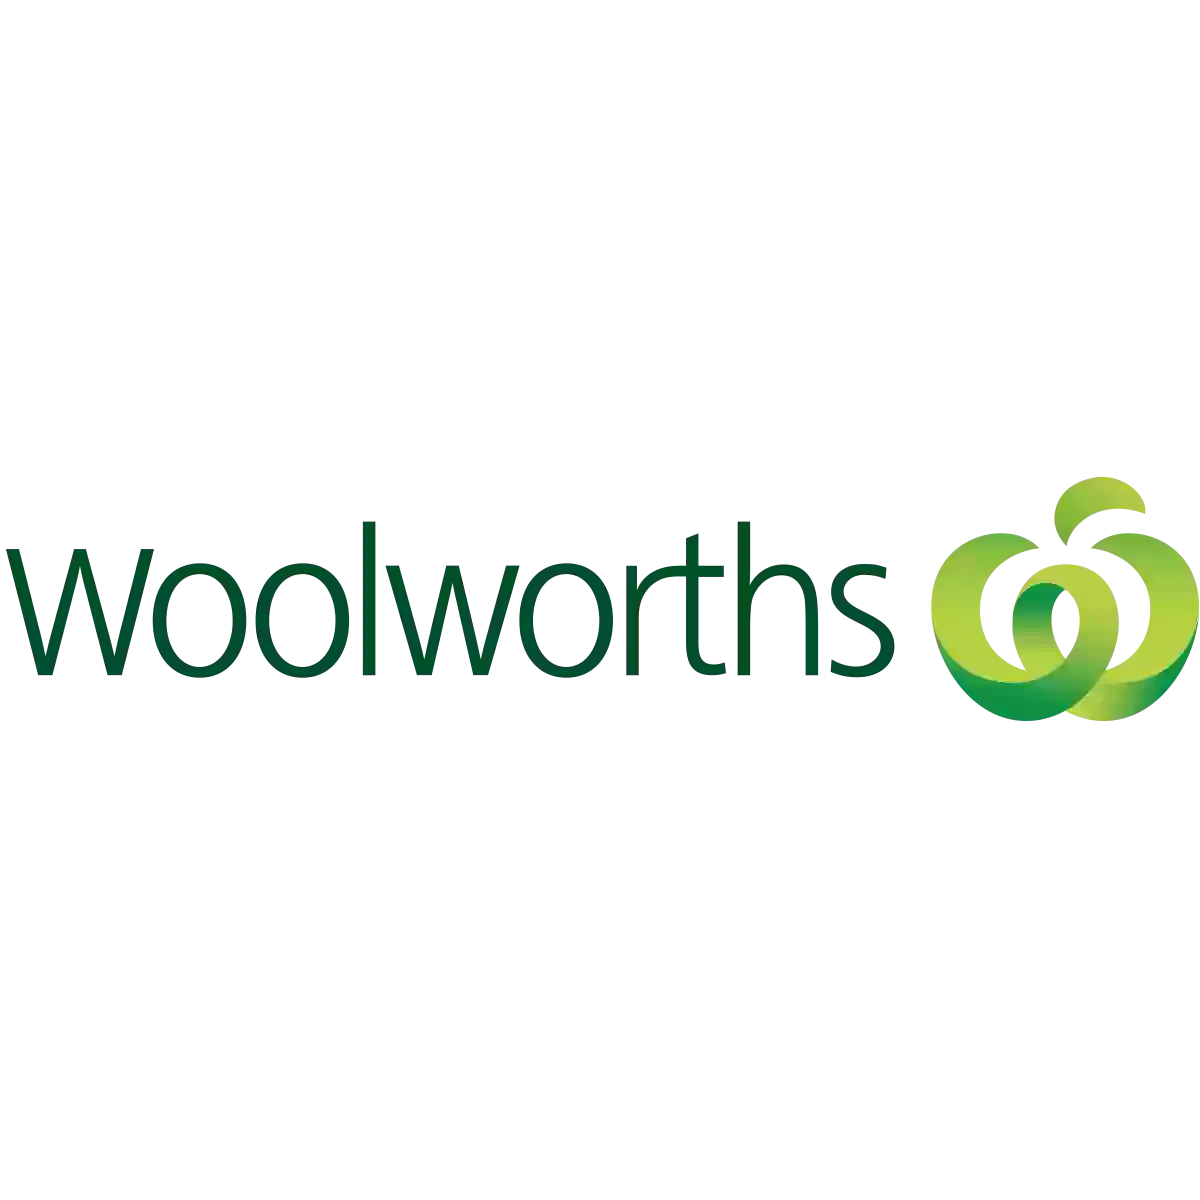 Woolworths Alexandra Hills